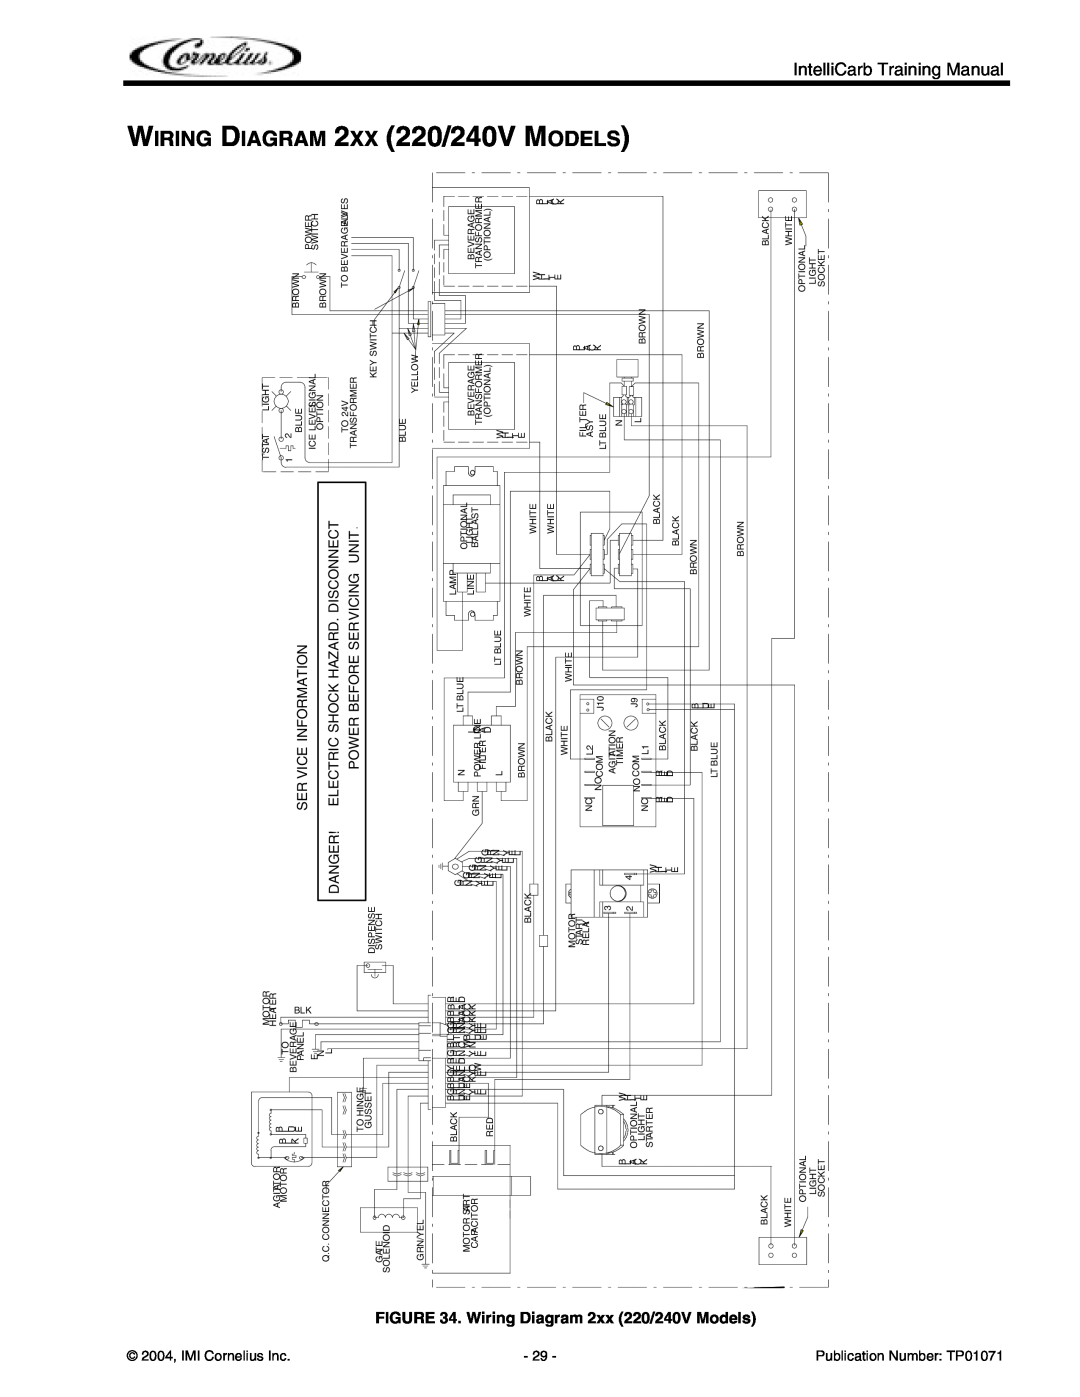 Cornelius Cold Beverage Dispenser manual Wiring Diagram, 2xx 220/240V Models, 2004, IMI Cornelius Inc, Ser Vice Information 